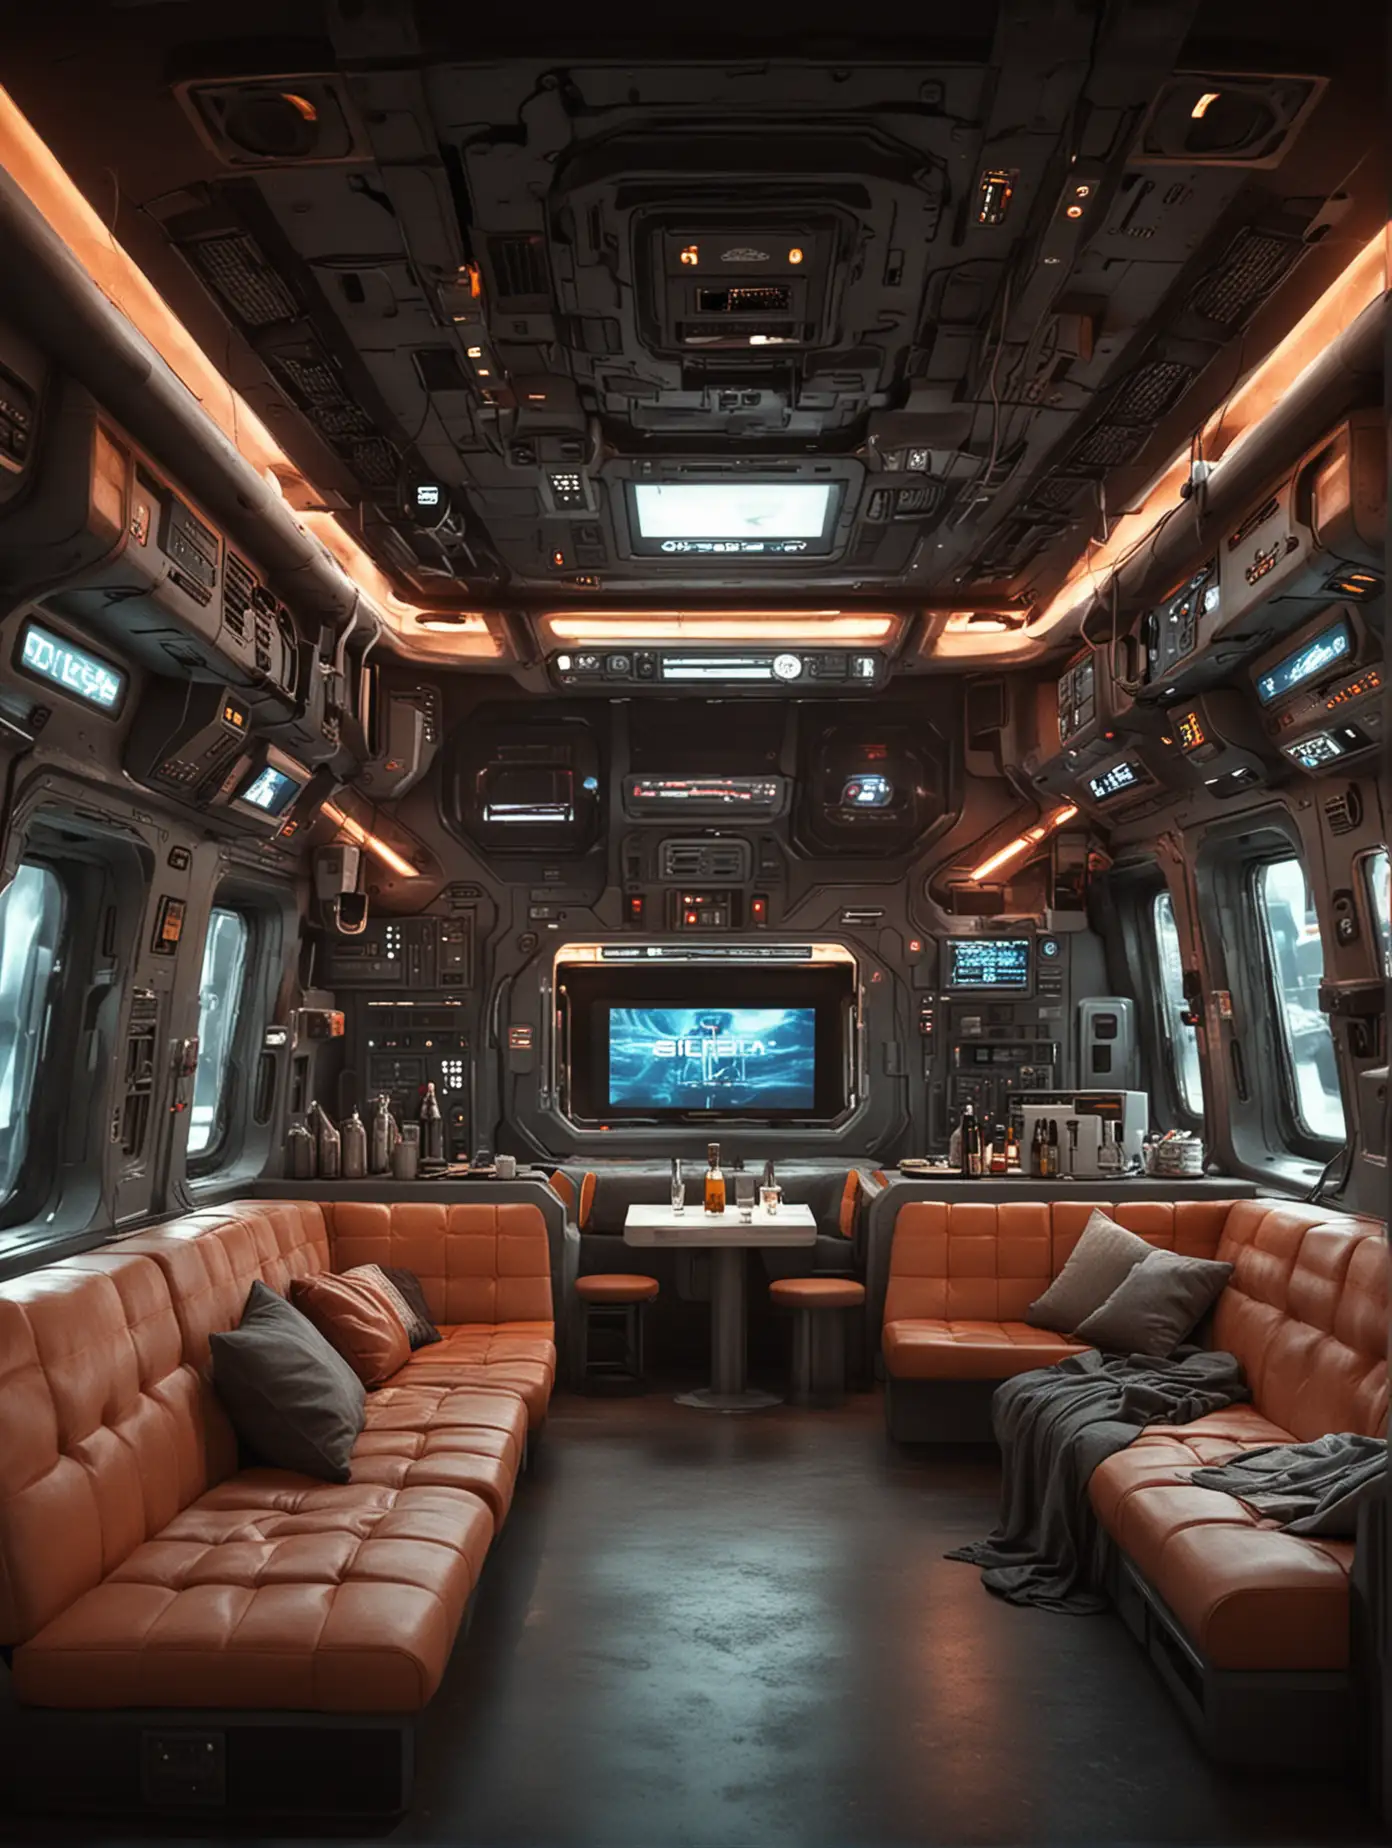 Sci-fi interior, sci-fi cab, lots of big screens, sofa, kitchen, bar